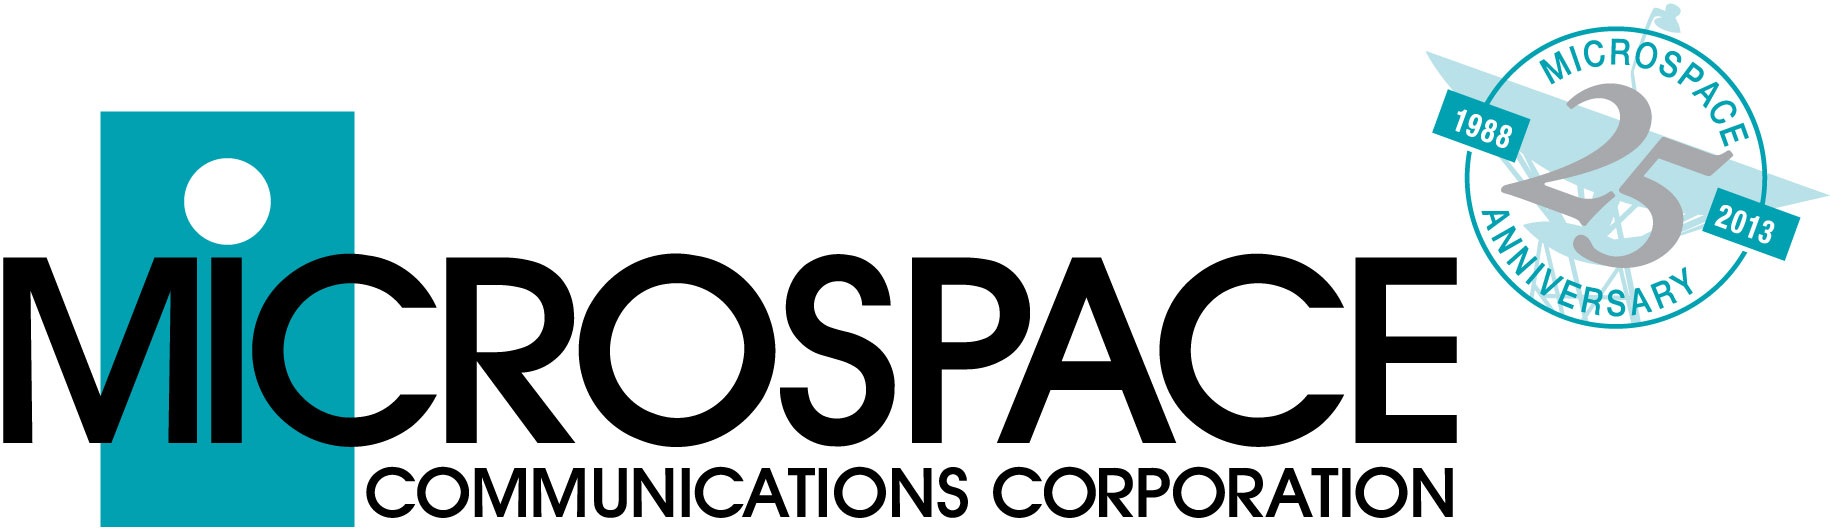 Microspace Communications Logo